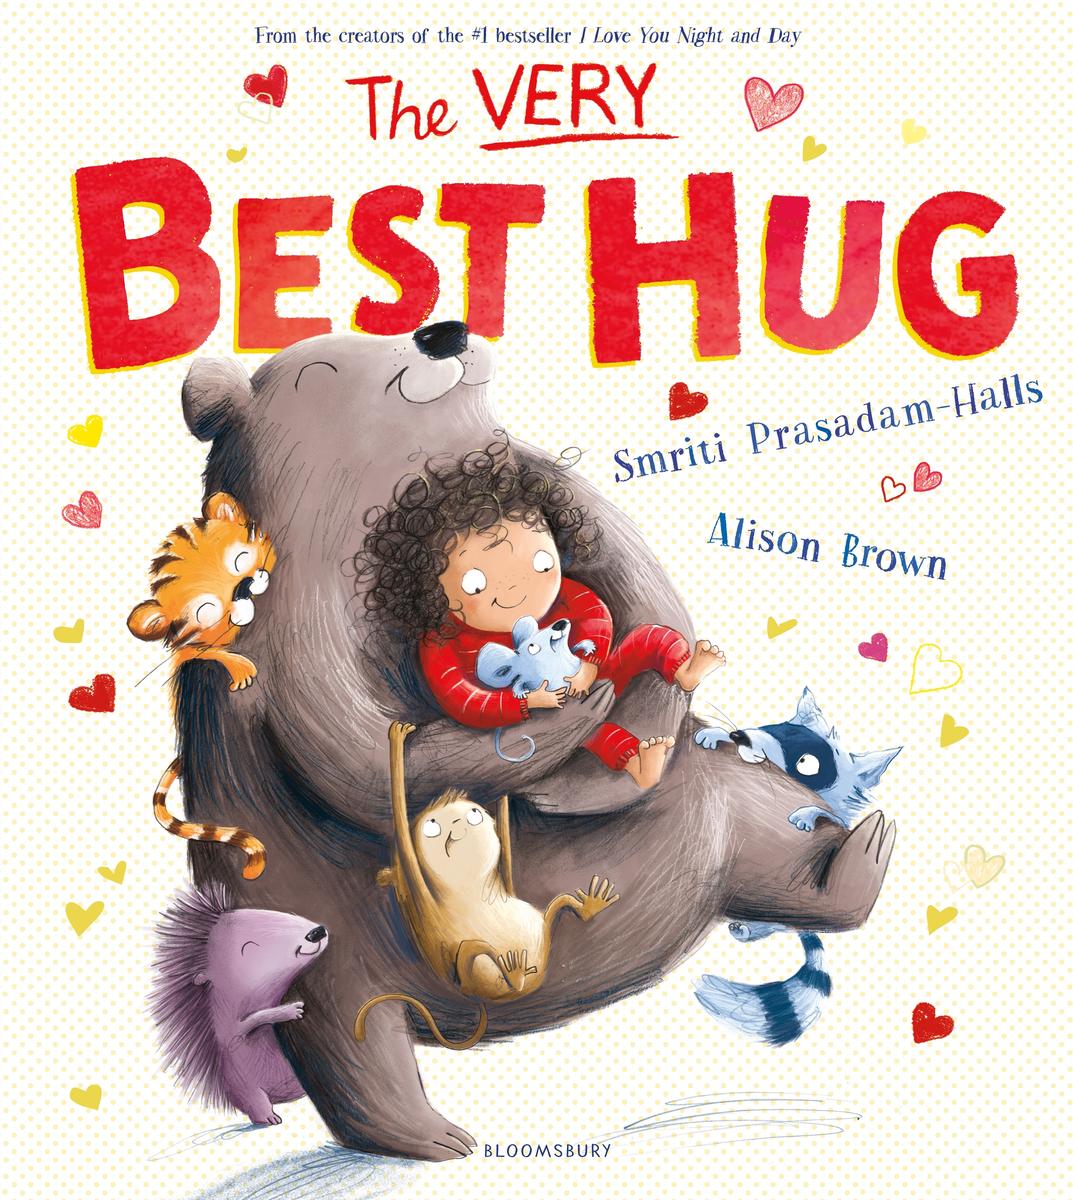 The Very Best Hug - 